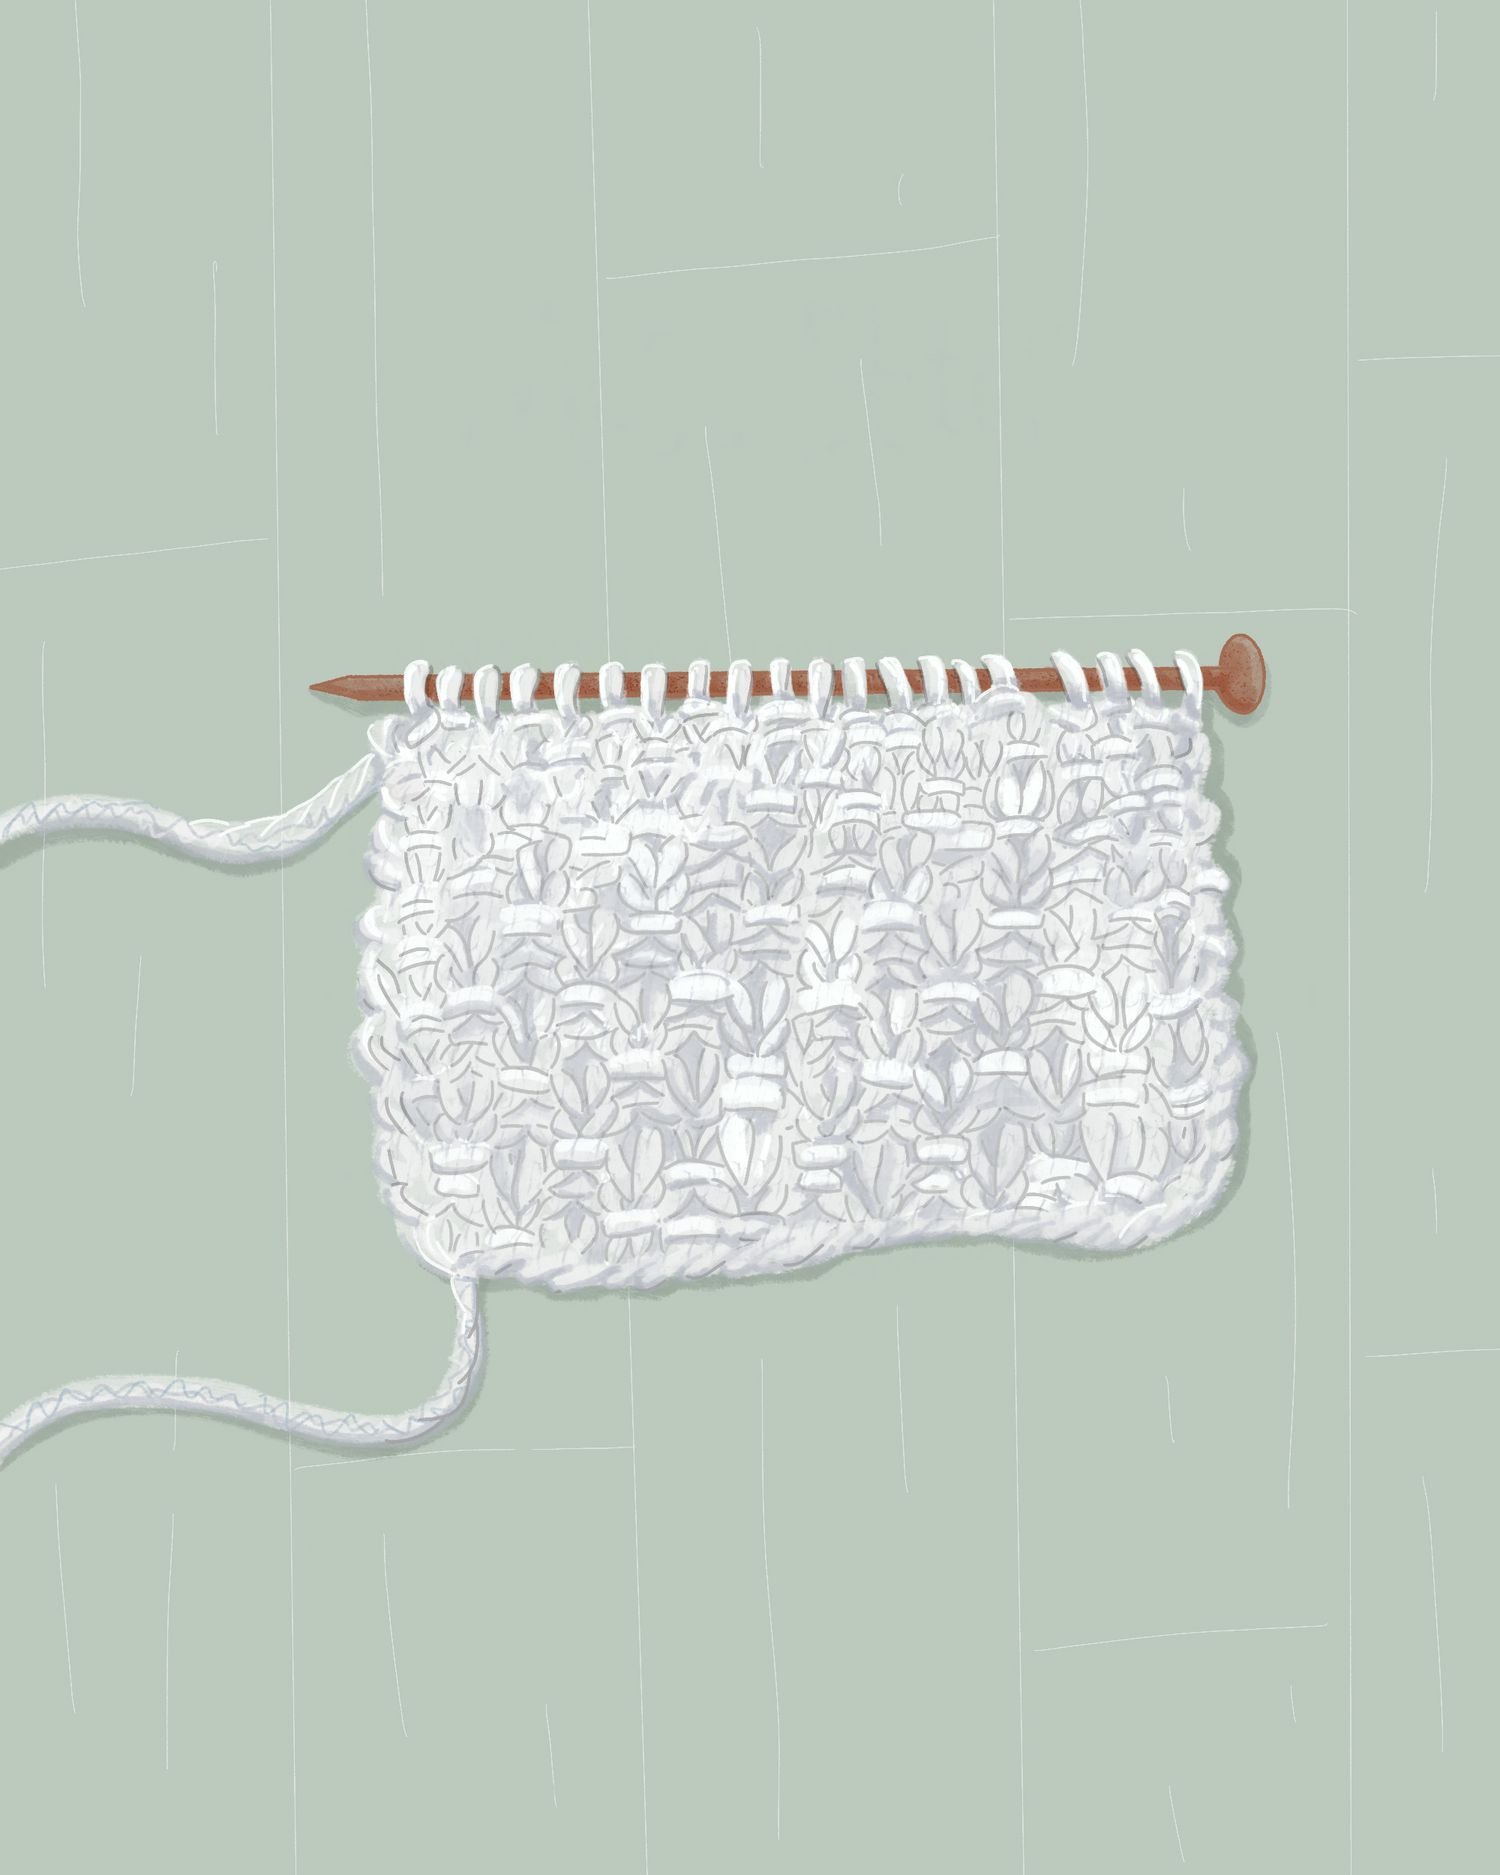 moss stitch in knitting